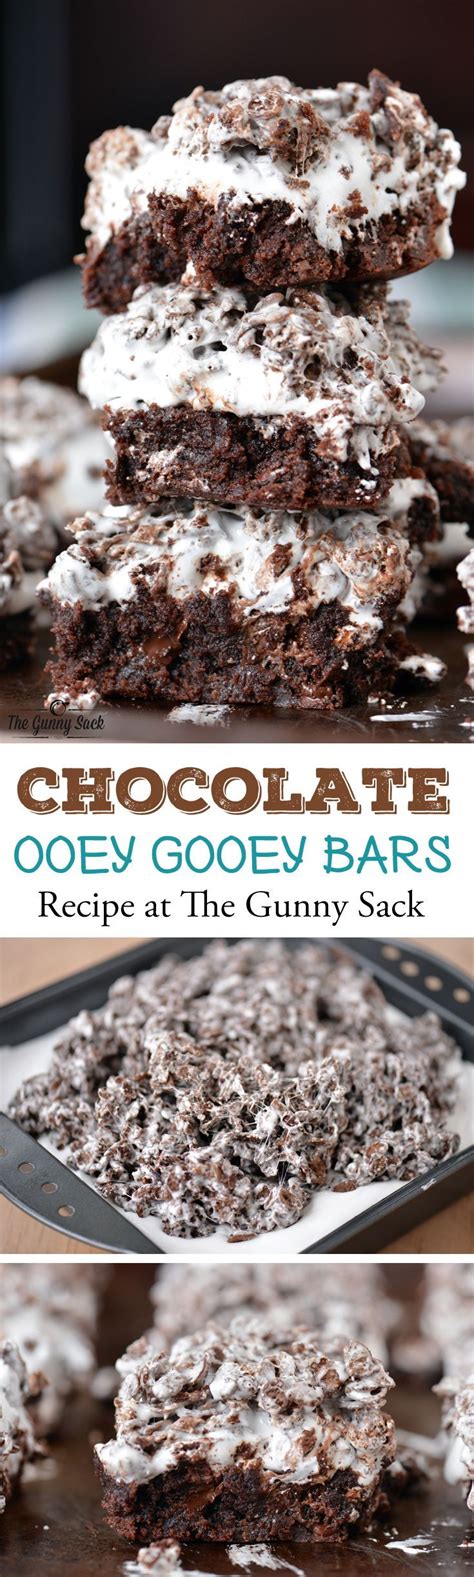 Chocolate Ooey Gooey Bars The Gunny Sack Chocolate Recipes Yummy